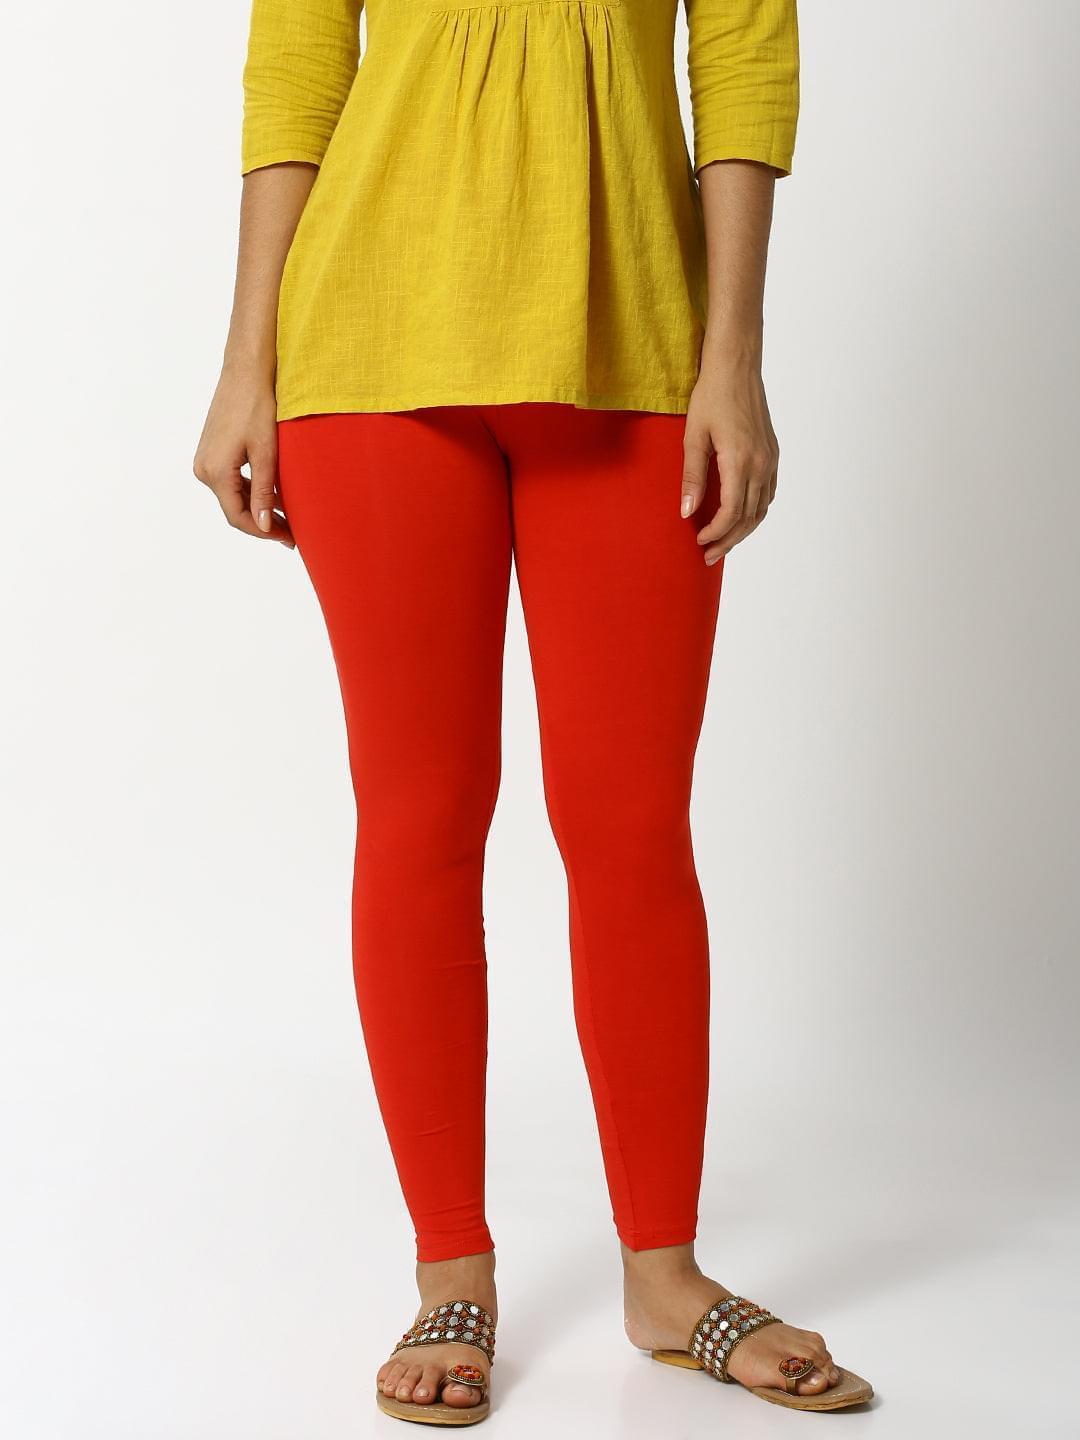 Buy Clovia Snug Fit Active Ankle-Length Tights - Orange at Rs.766 online |  Activewear online